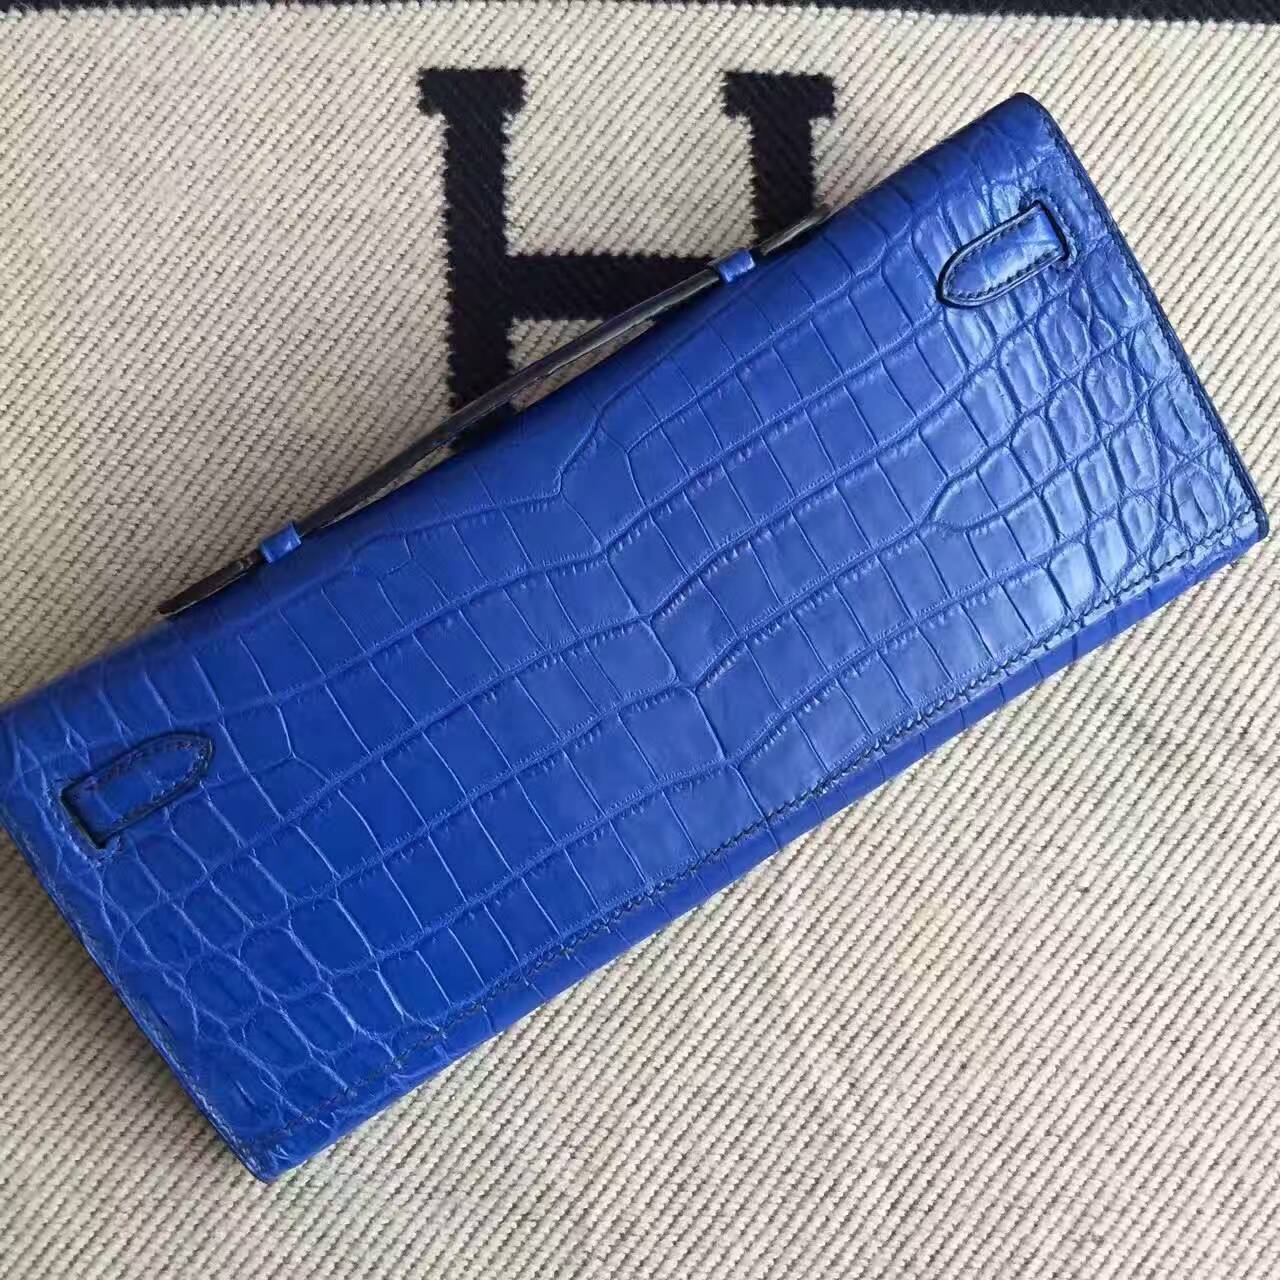 Sale Hermes 7T Blue Electric Crocodile Matt Leather Kelly Cut Clutch Bag31cm